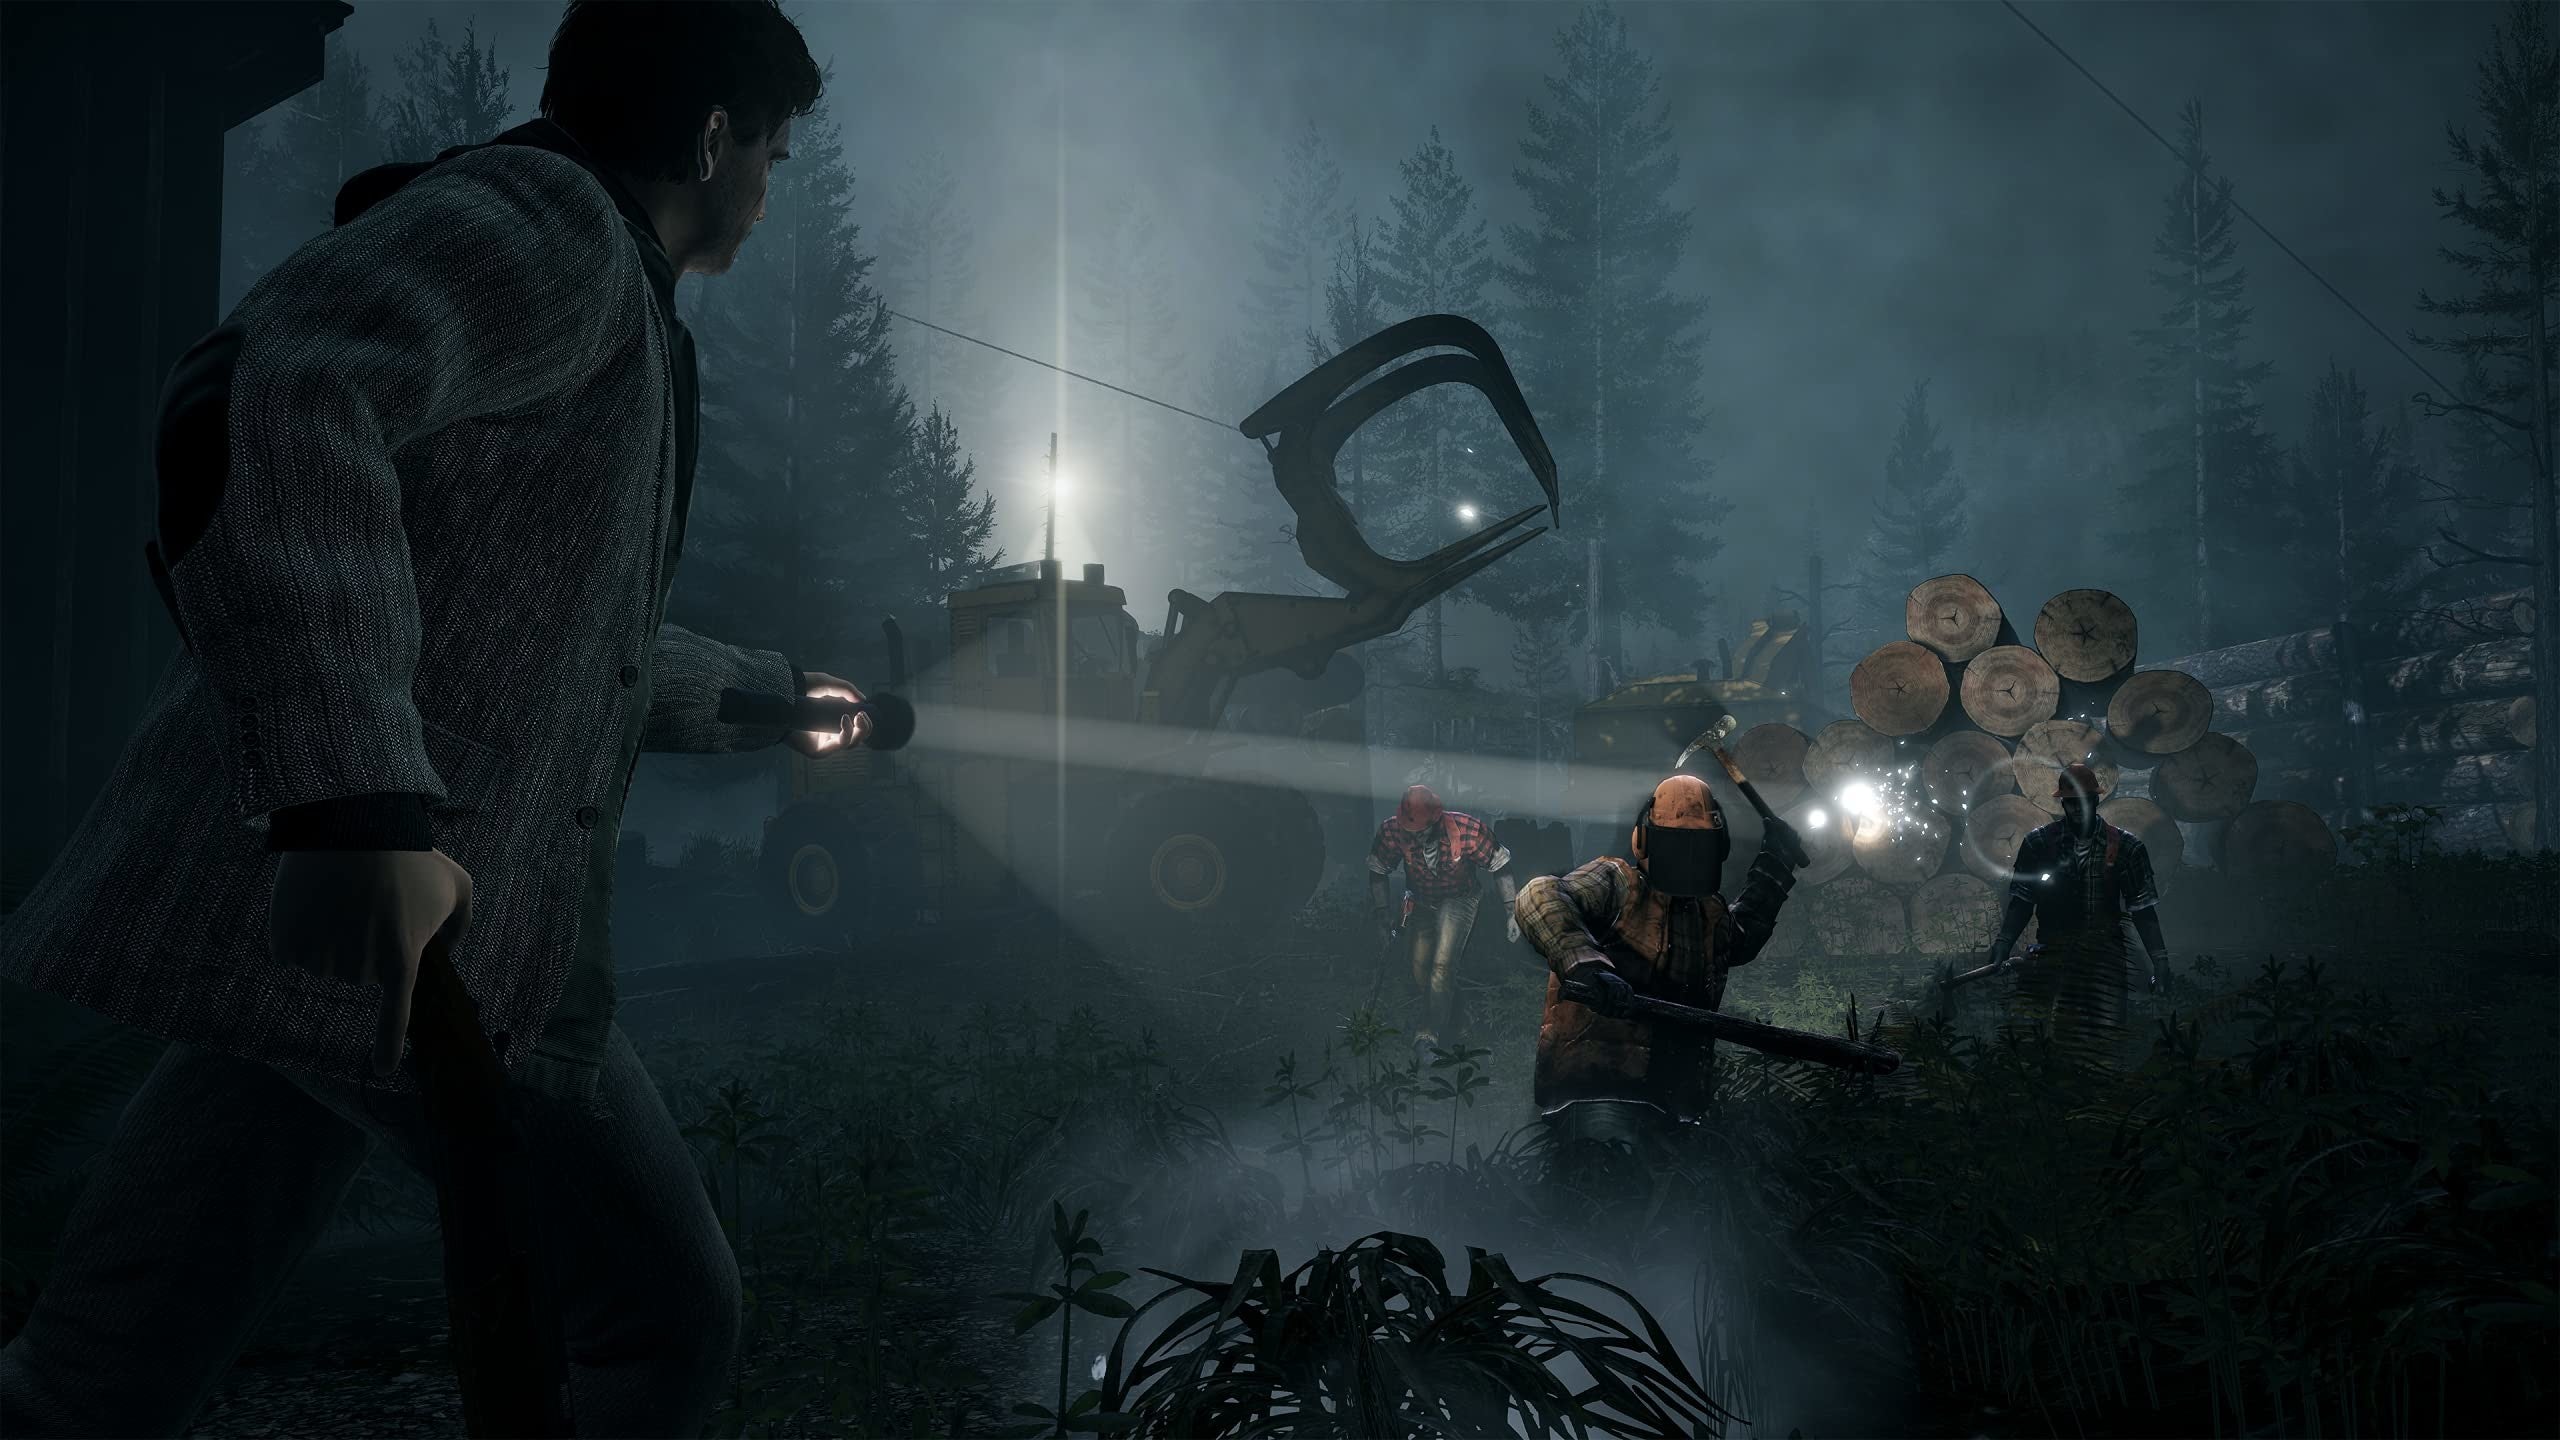 Alan Wake Remastered leaked images show nice visual improvements | VG247